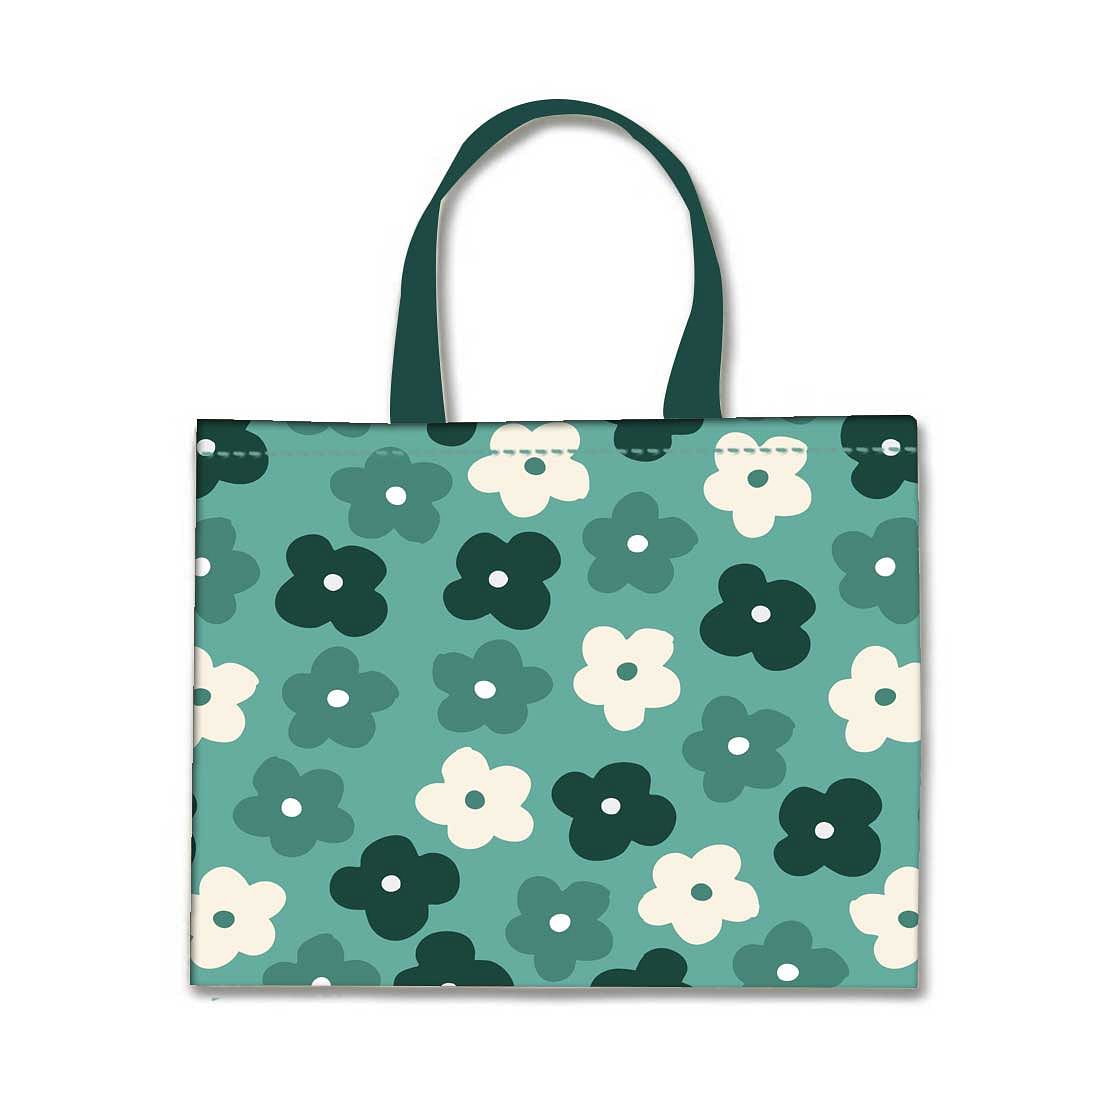 Nutcase Designer Tote Bag for Women Gym Beach Travel Shopping